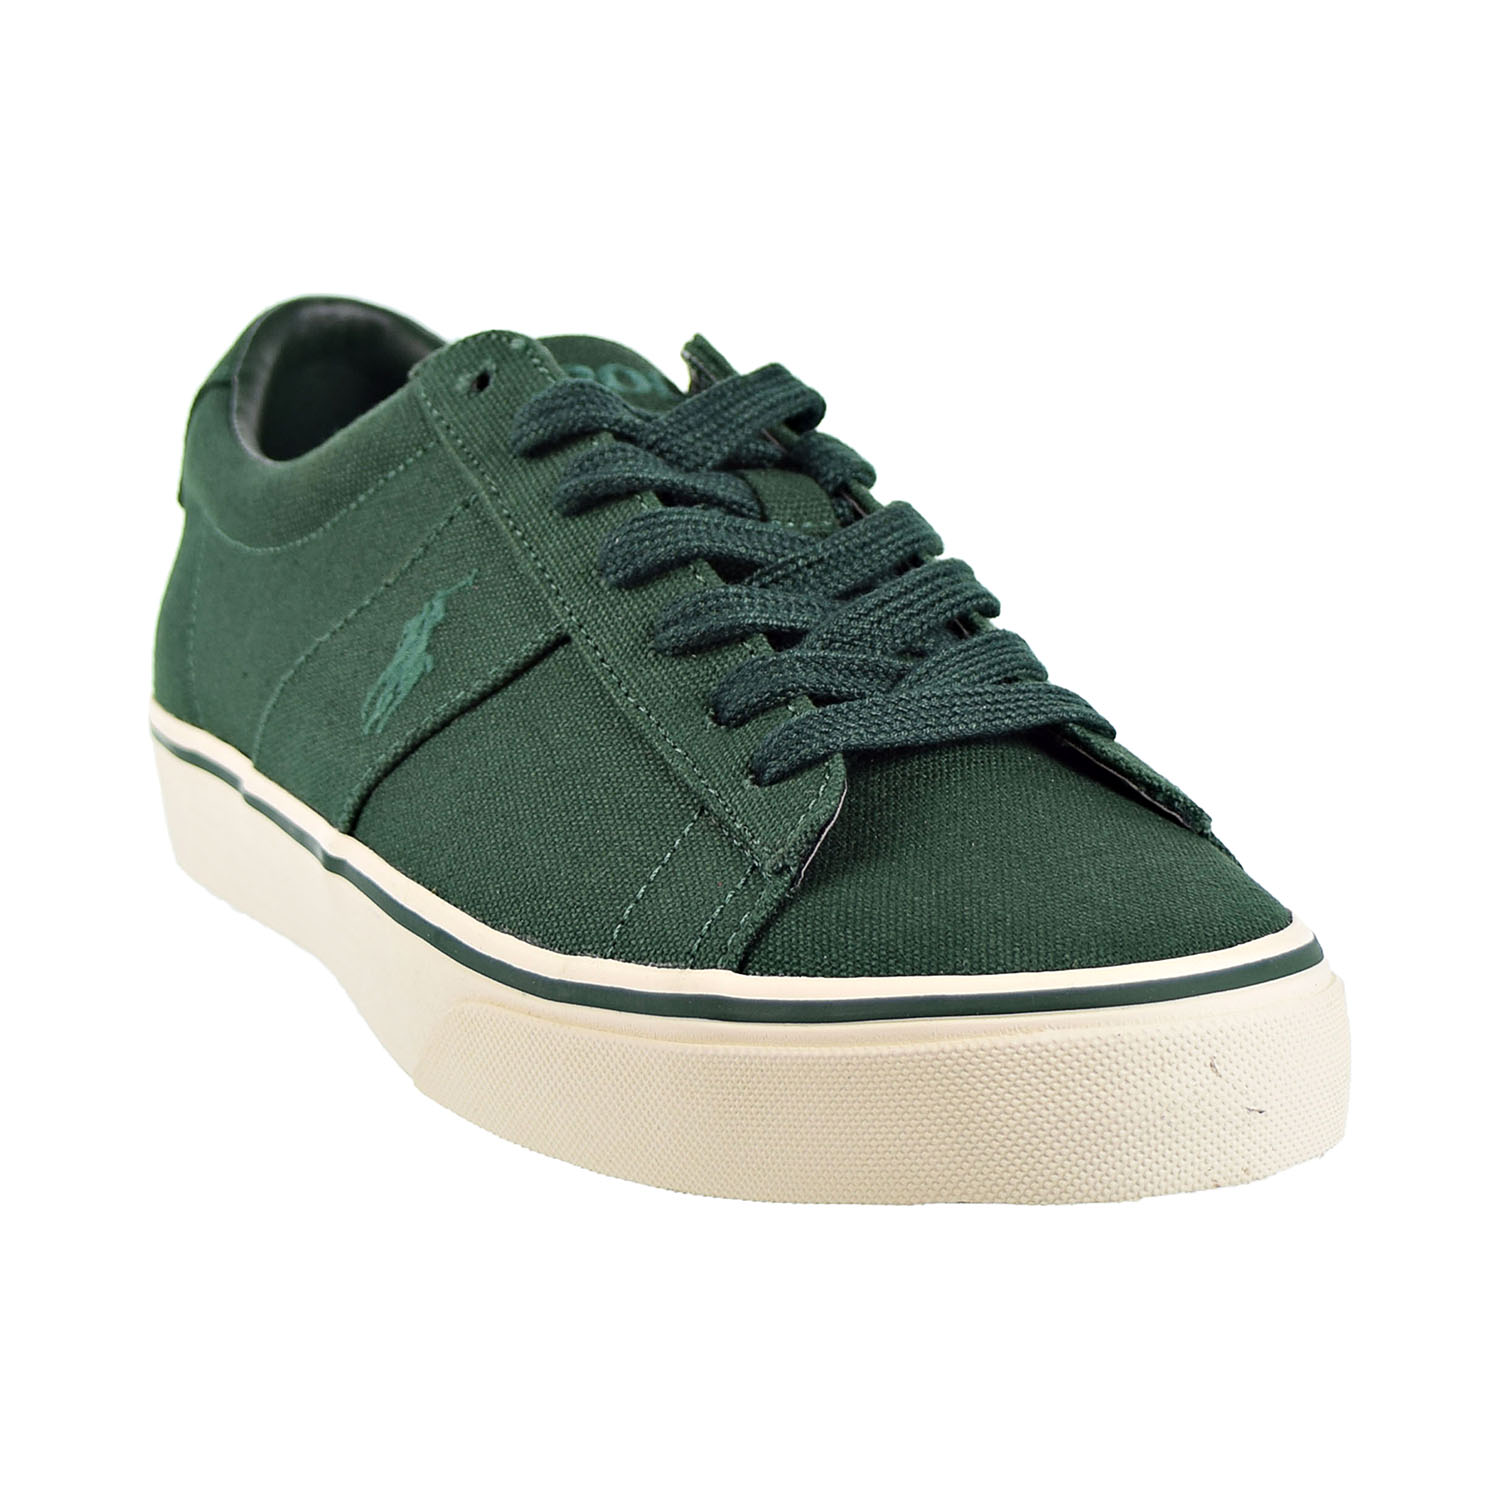 Polo Ralph Lauren Sayer Men's Shoes Green 816710017-002 - image 2 of 6